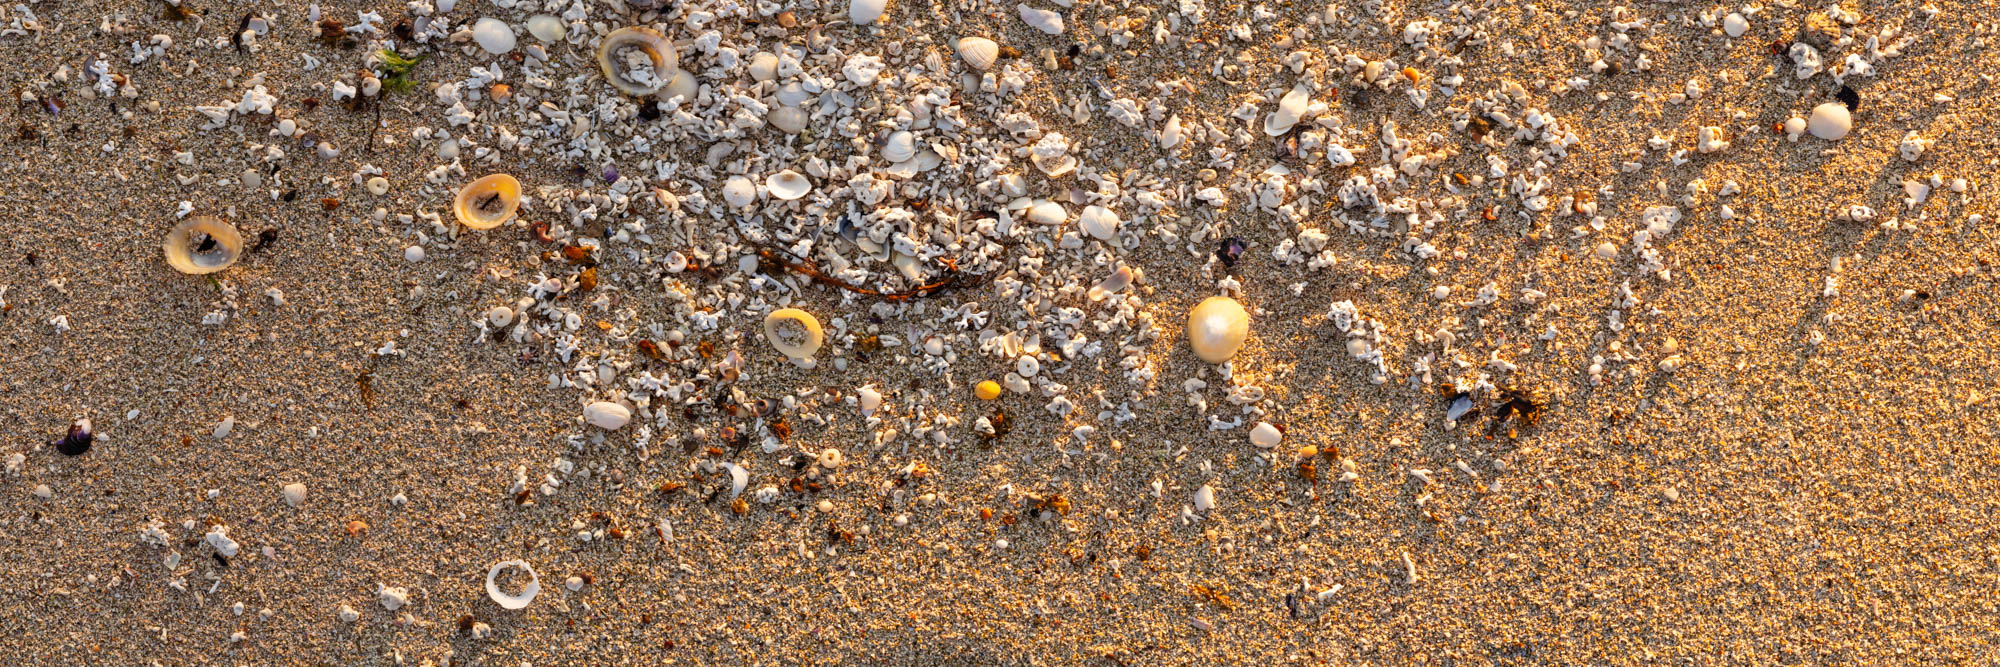 Panorama of sea shells and treasures on the beach